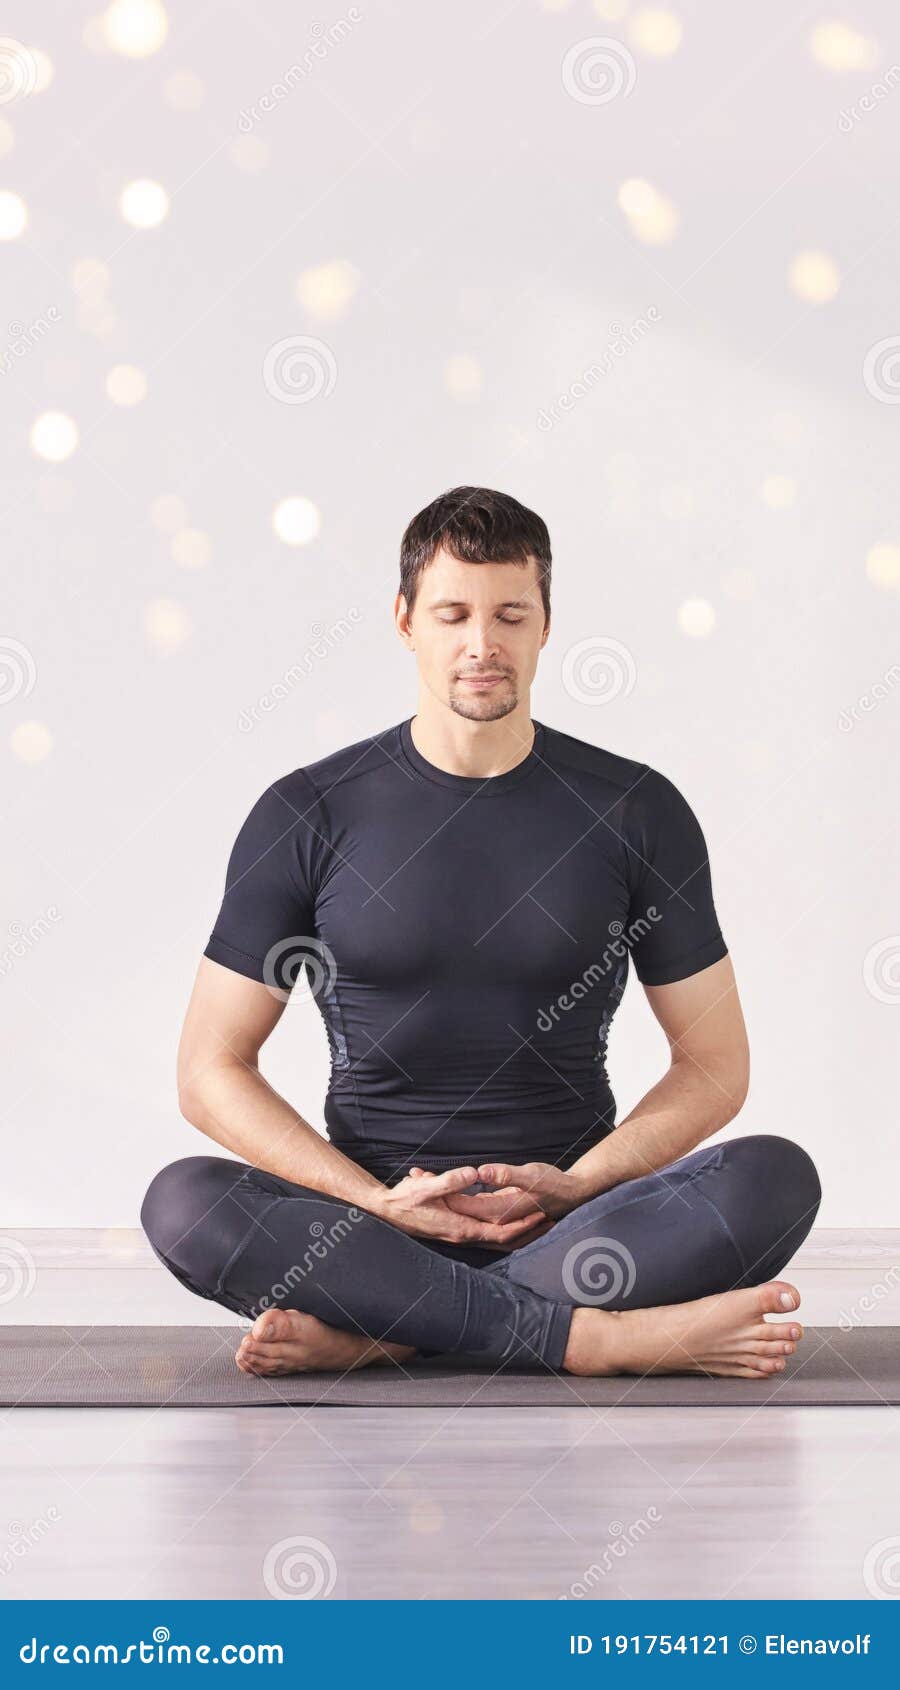 One woman doing pranayama breath jalandhara bandha exercise sitting in  lotus pose, next yogi stretches her shoulders and back standing on one leg  in asana tree pose vrksasana - Stock Image - Everypixel